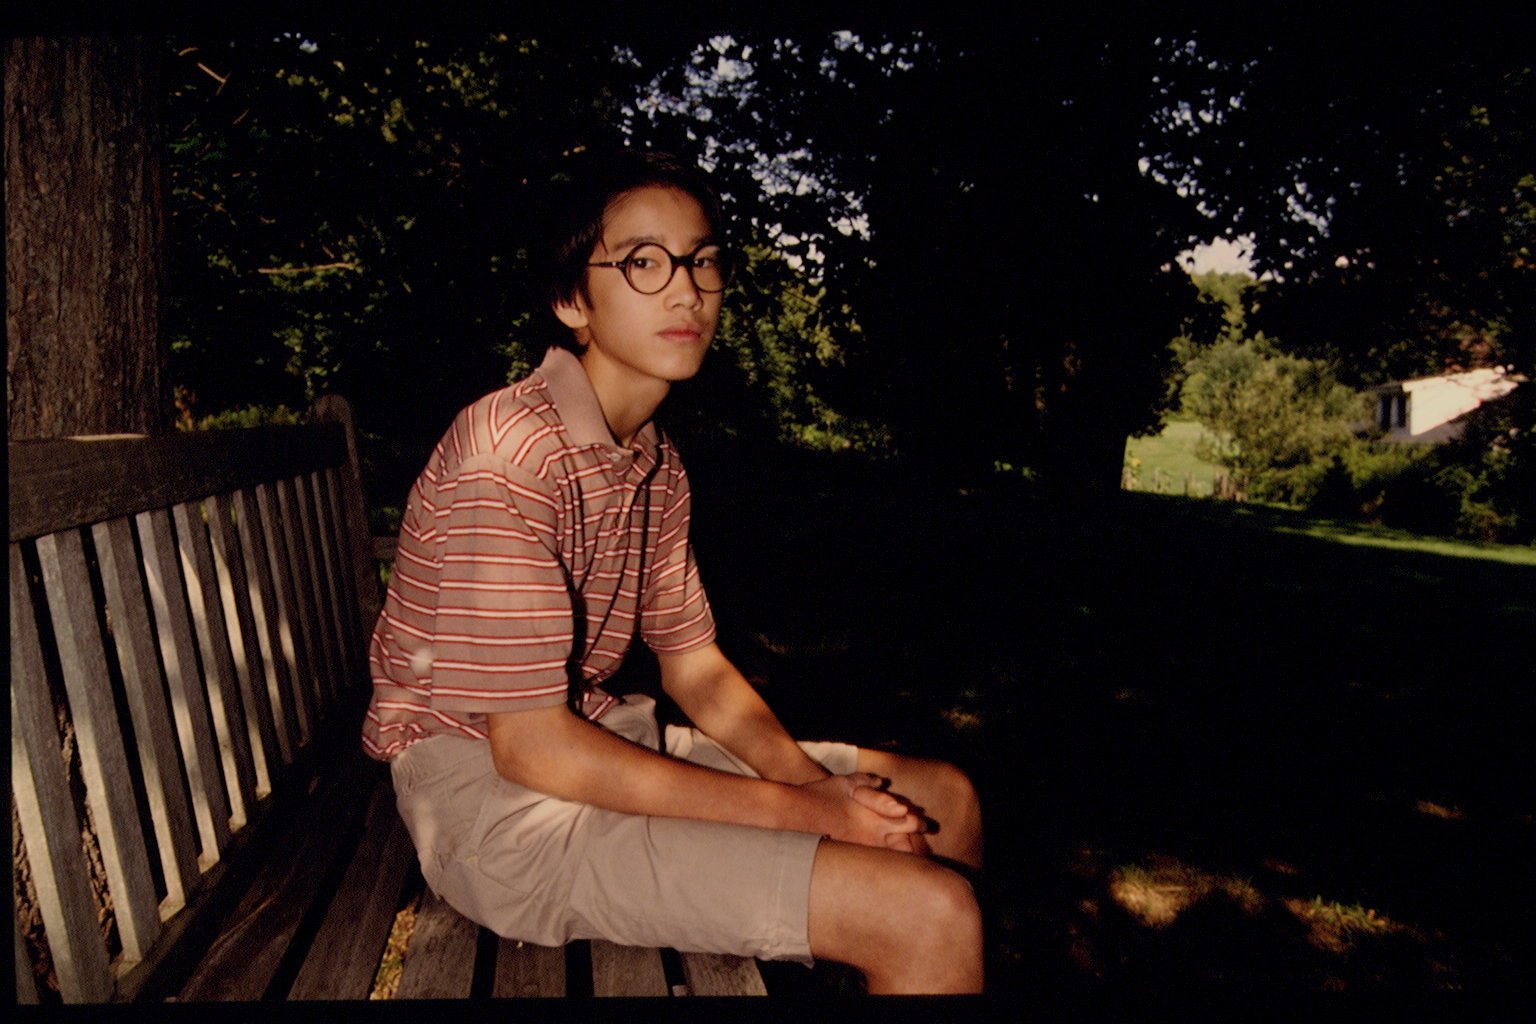 Moses Farrow, one of Mia Farrow's children, sitting outdoors